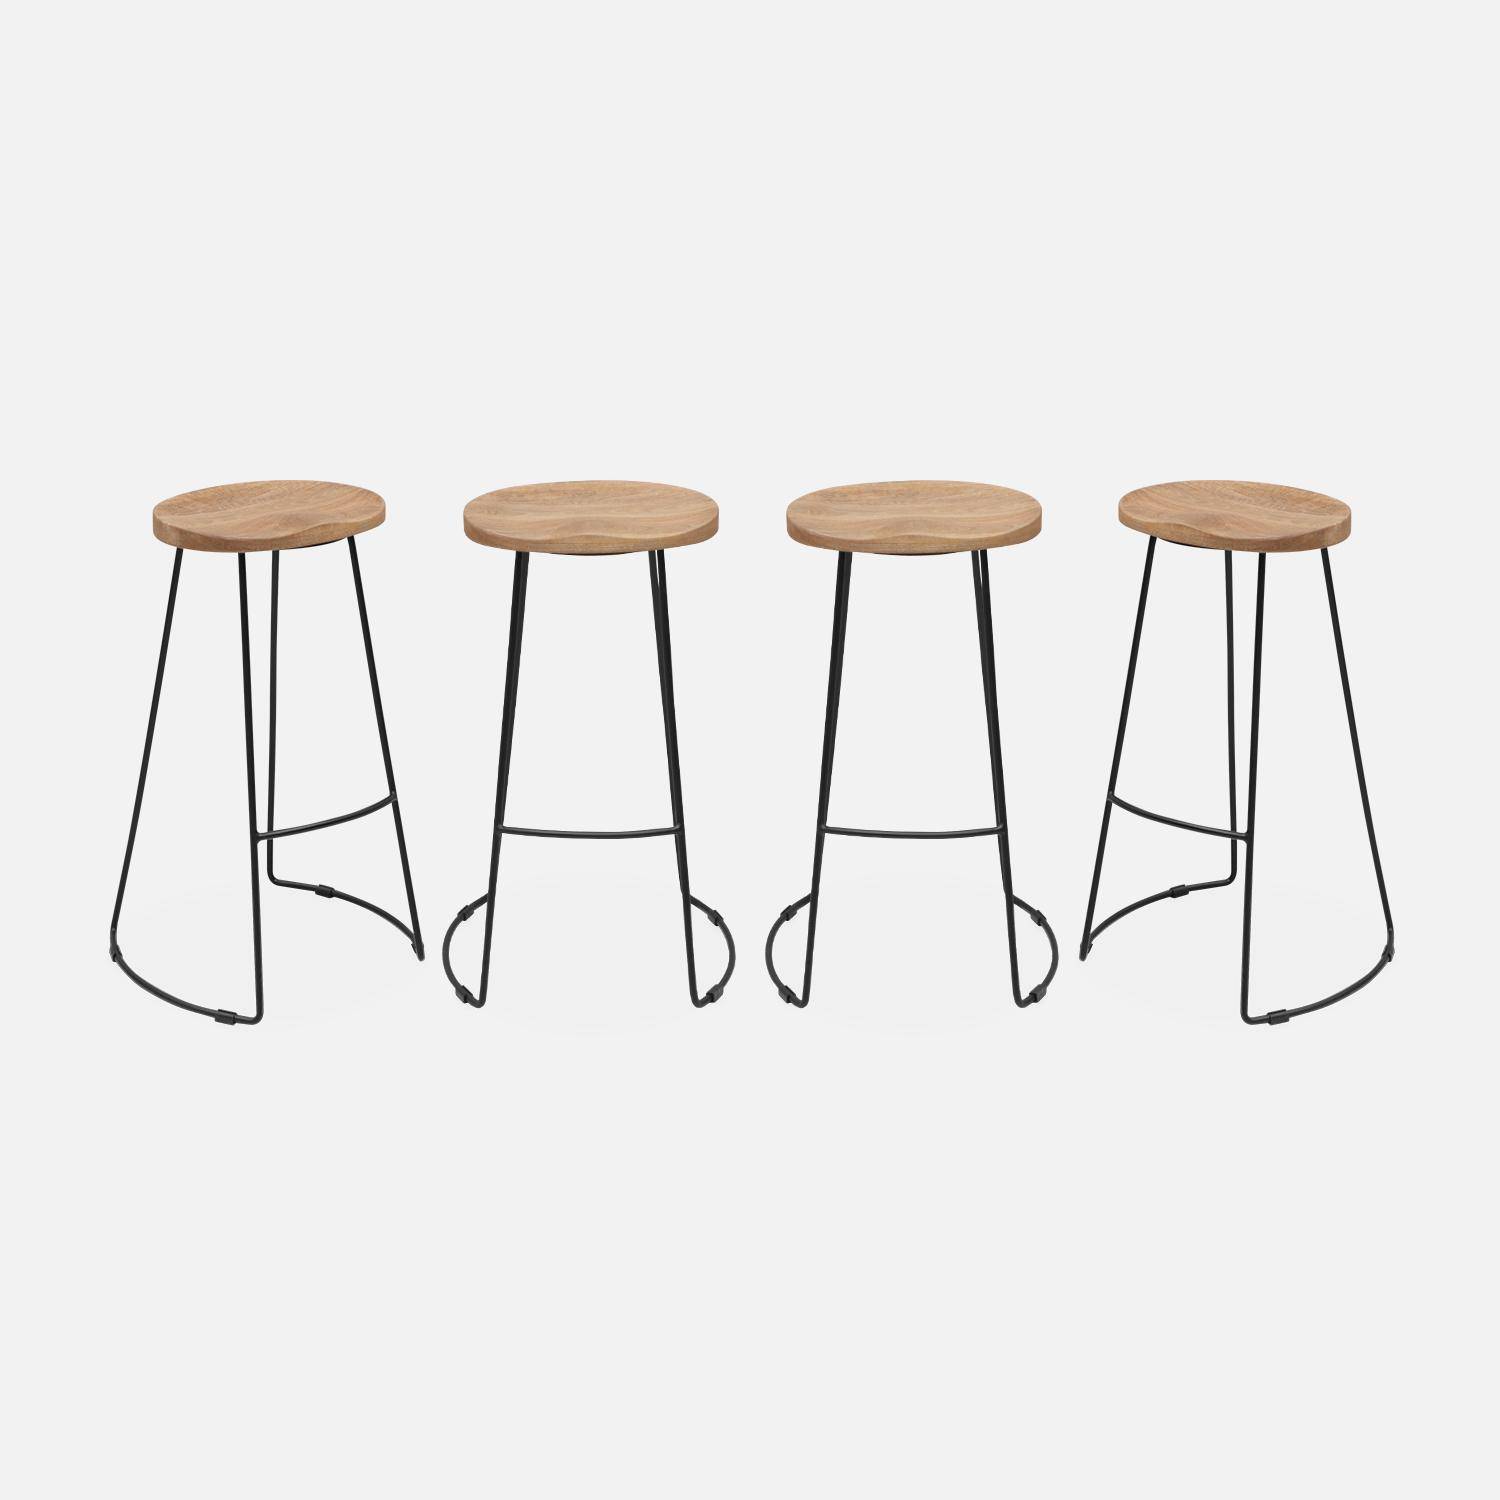 Set of 4 industrial metal and wooden bar stools, 47x40x75cm, Jaya, Mango wood seat, black metal legs,sweeek,Photo3